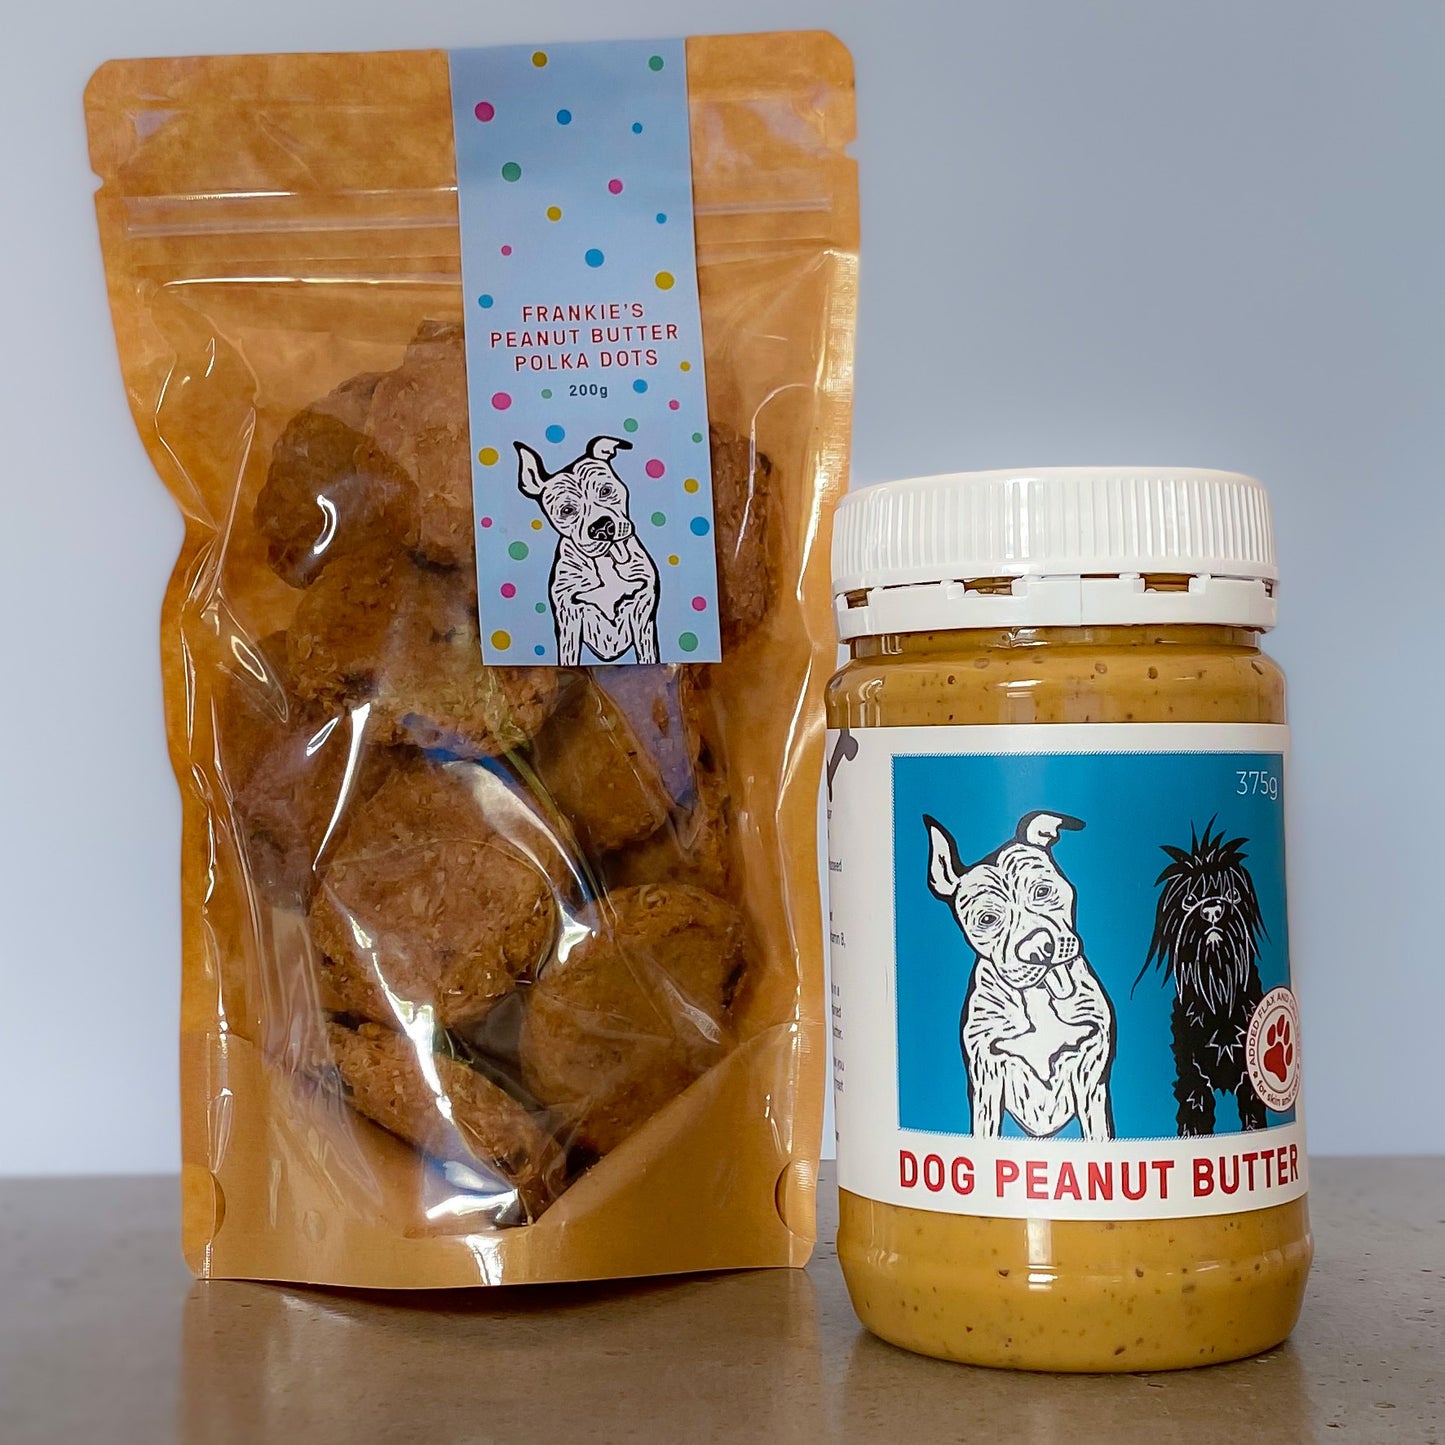 The Byron Bay Peanut Butter Dog Treats